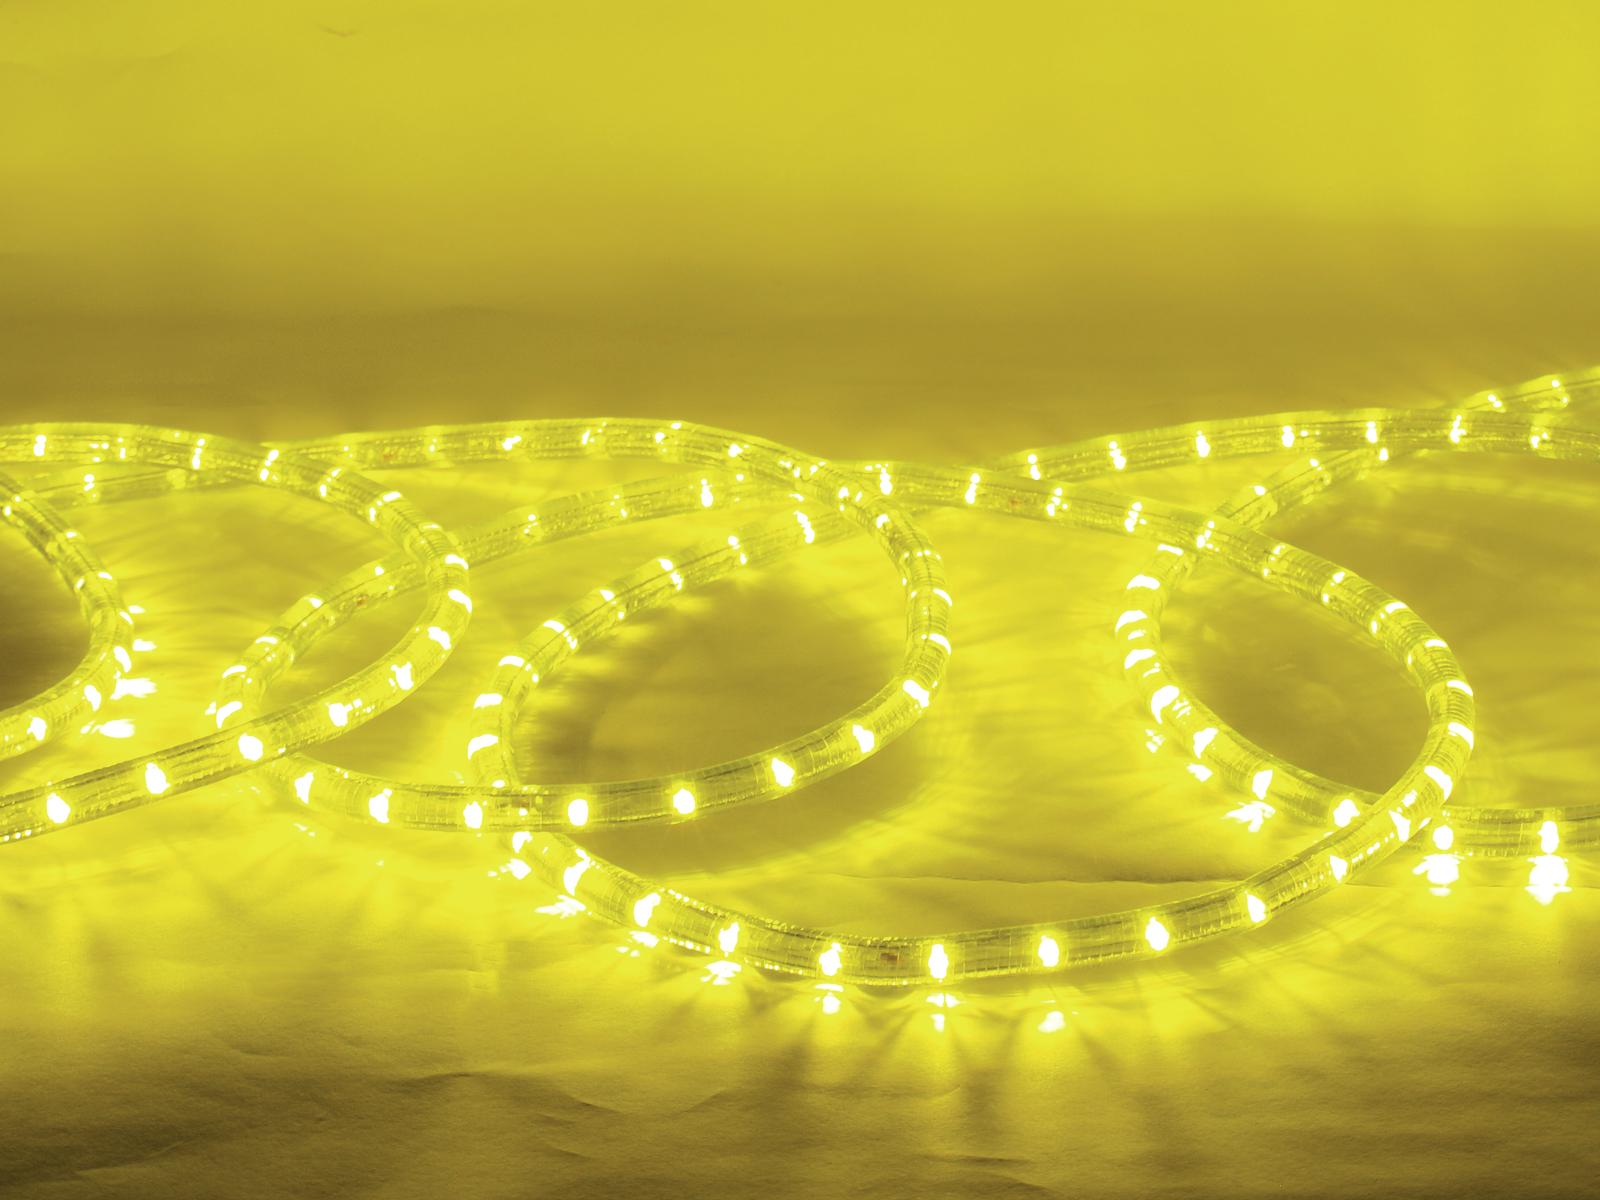 RUBBERLIGHT LED Lichtschlauch - Outdoor - RL1 - 1056 LED - 44m - anschlussfertig - gelb